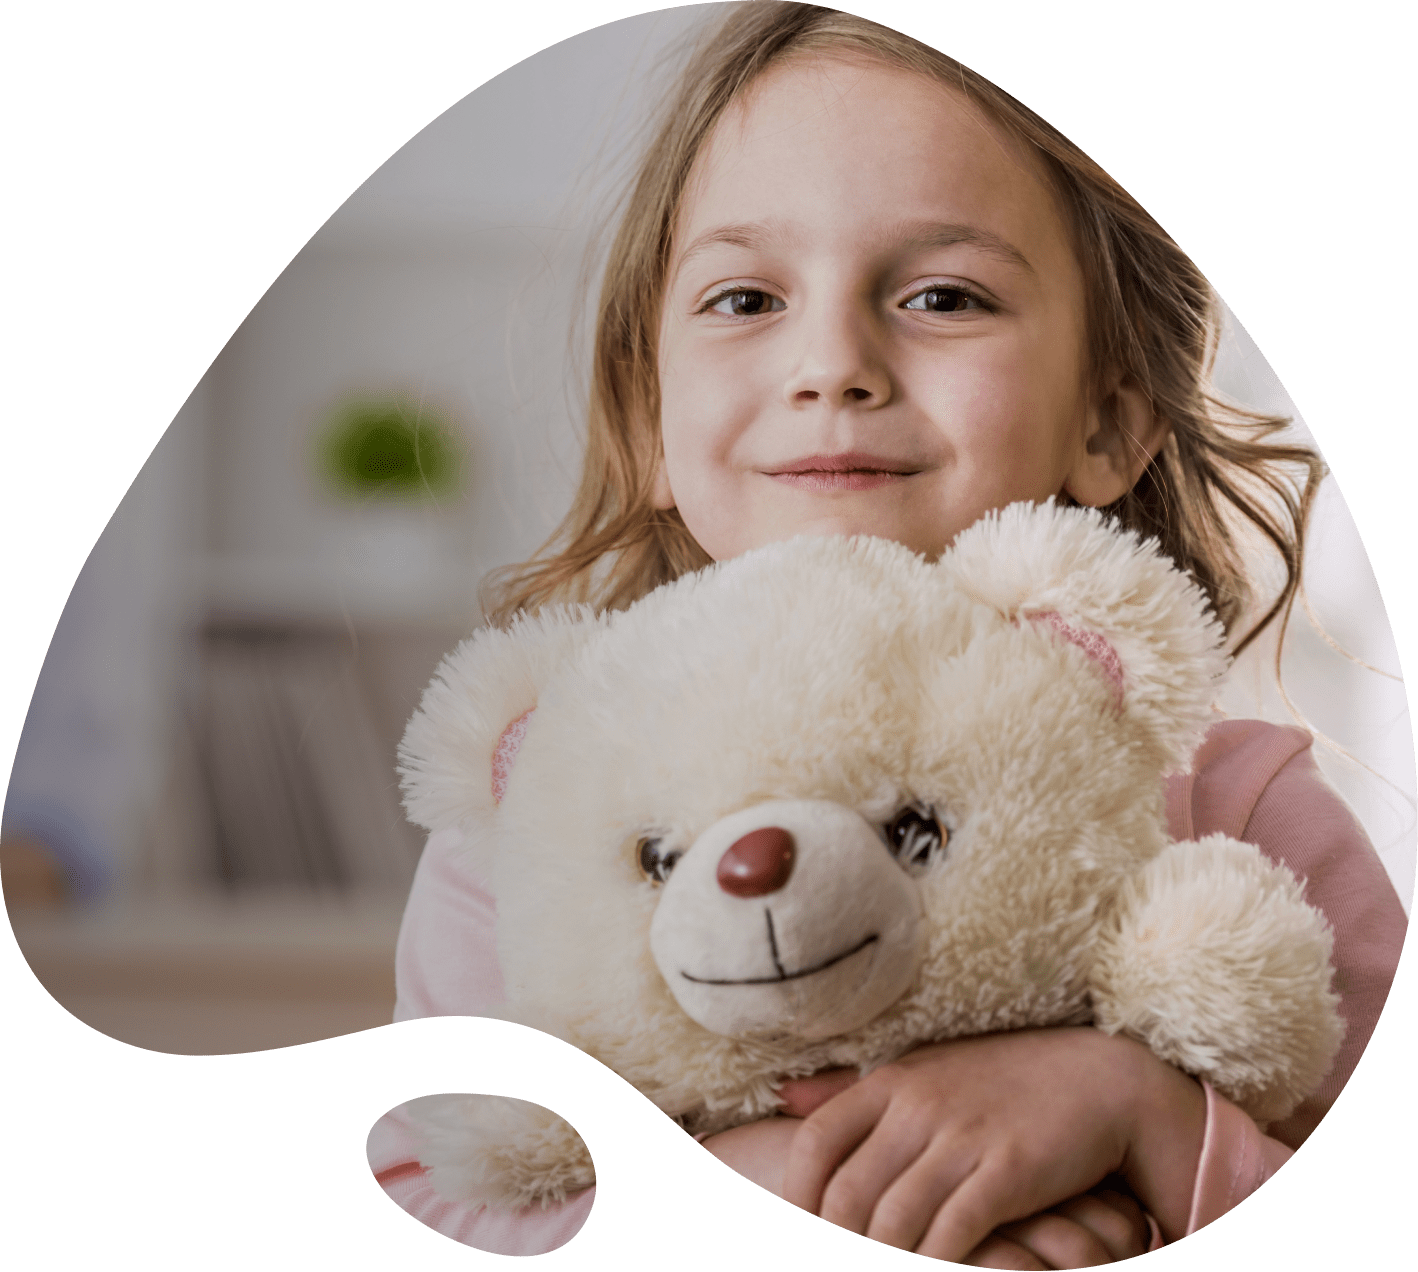 Happy child with a teddy bear